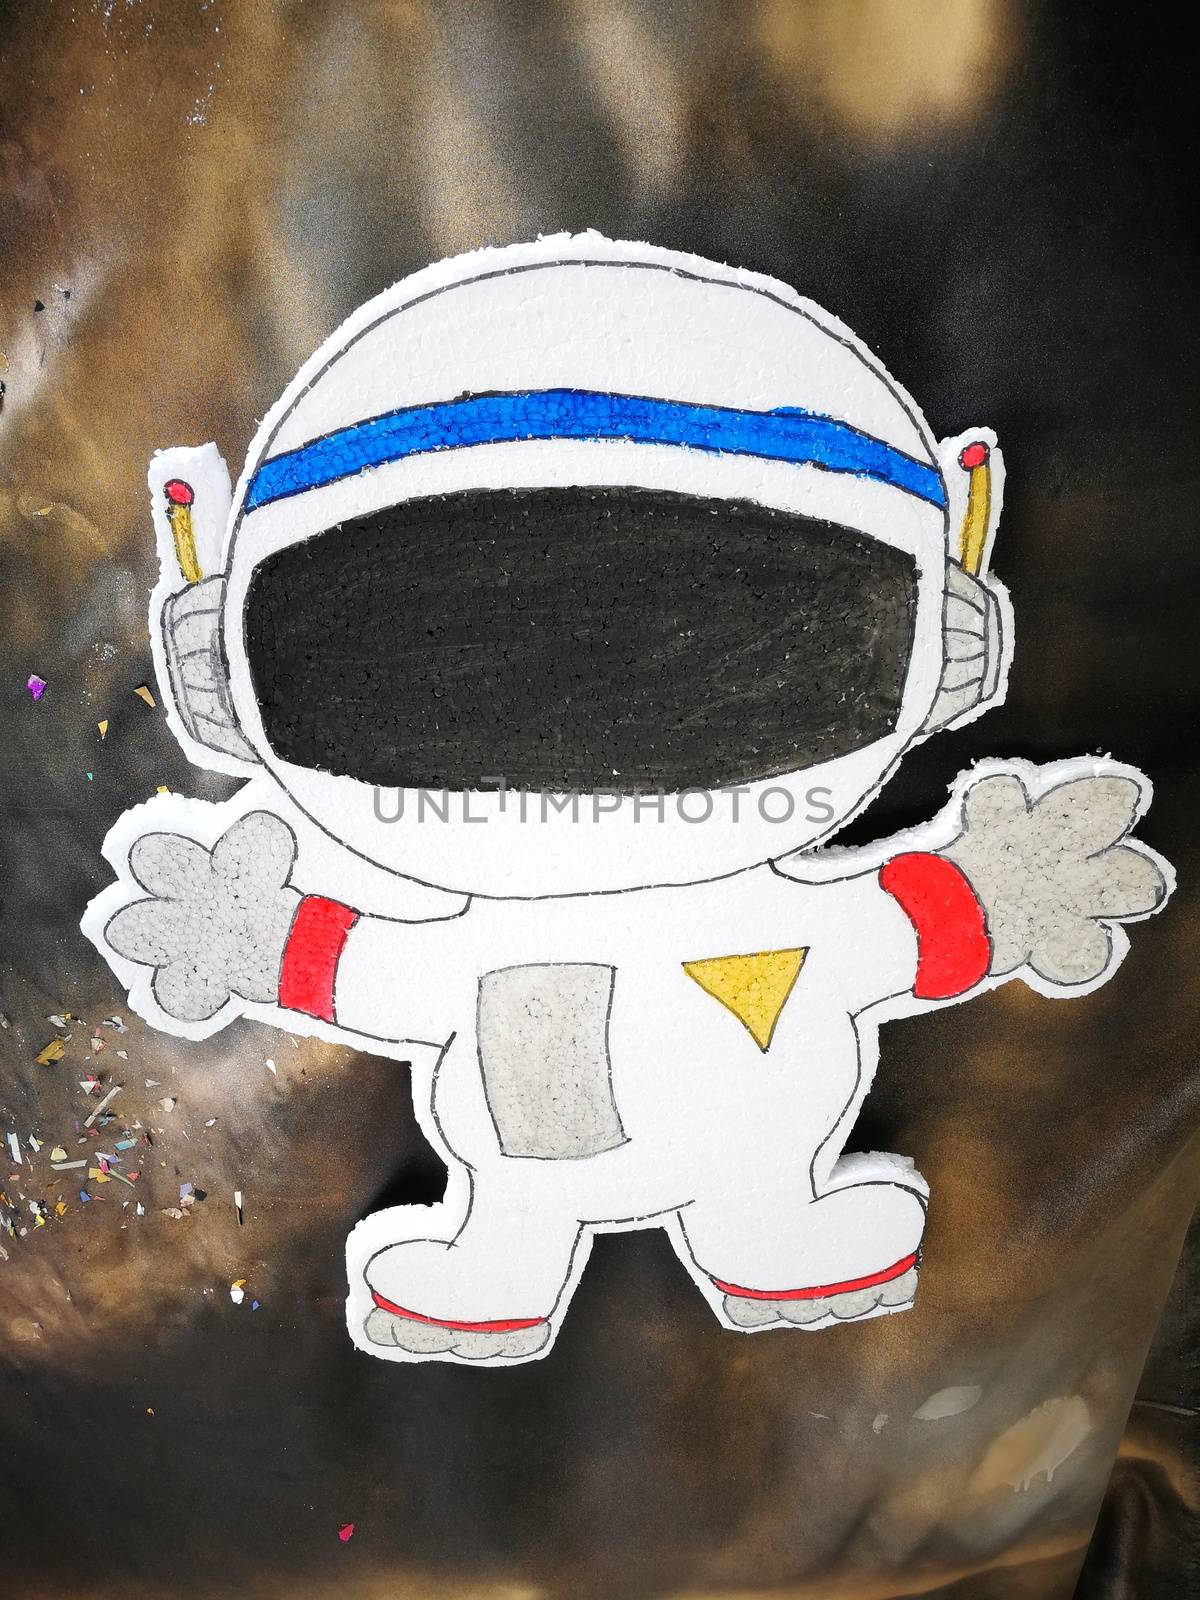 Spacecraft item cartoon in student board